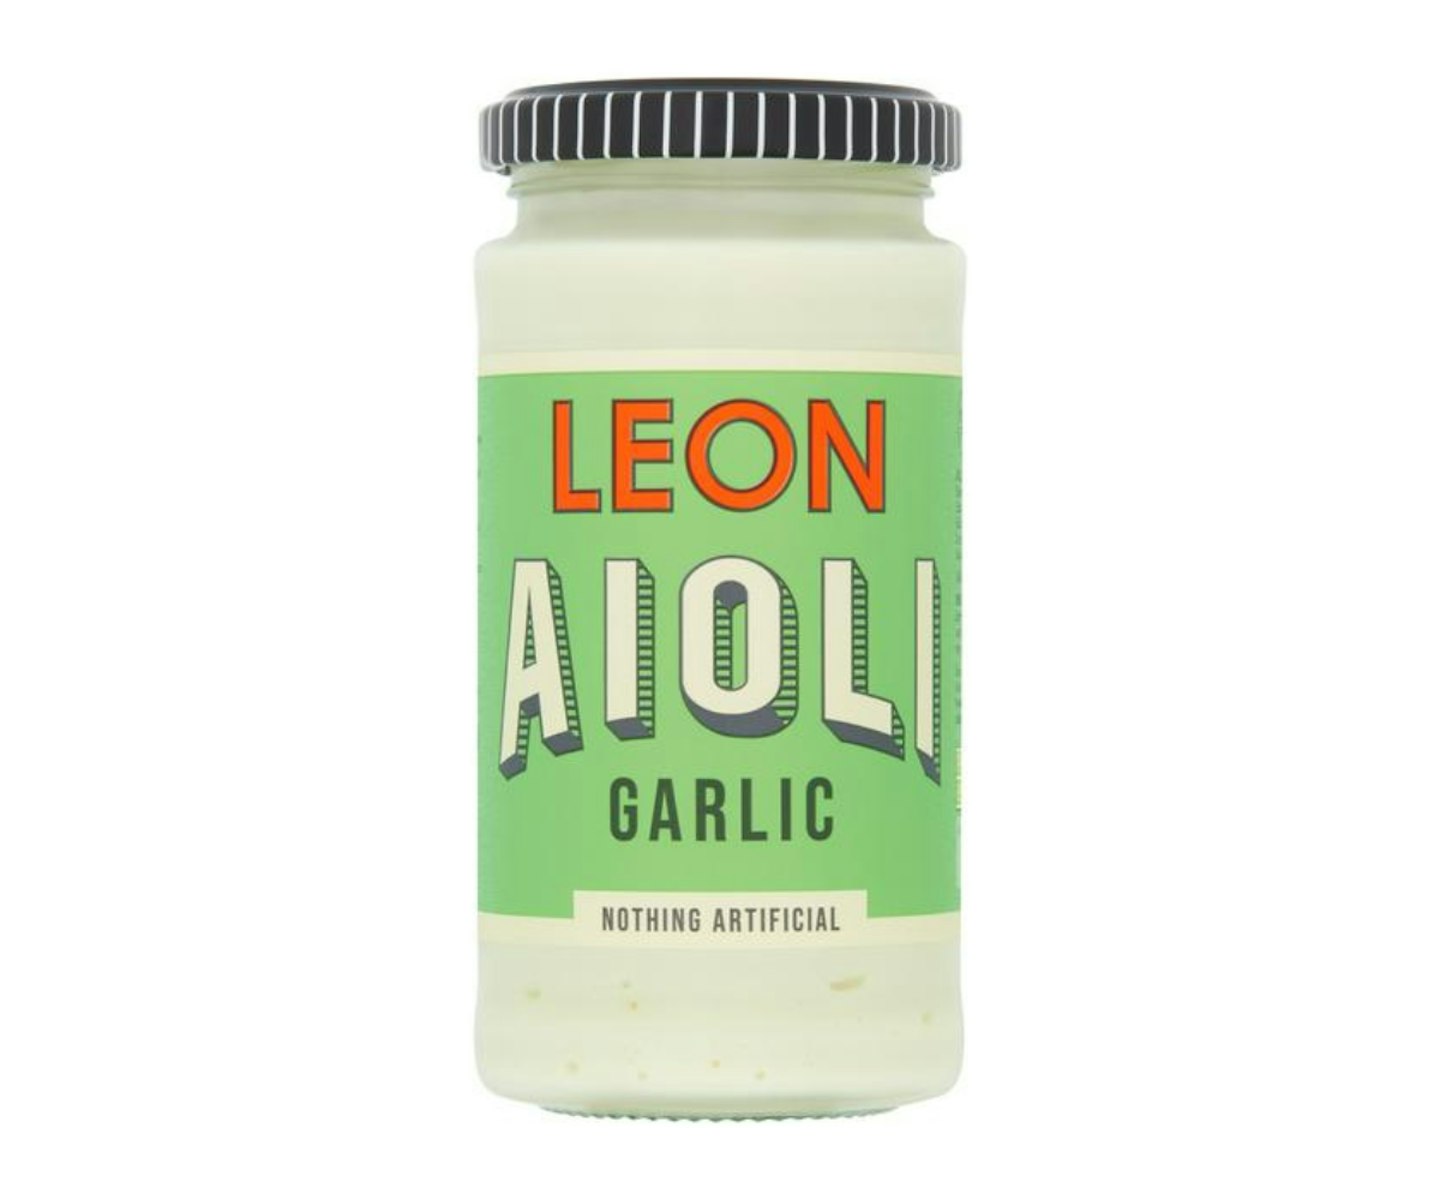 LEON Garlic Aioli 